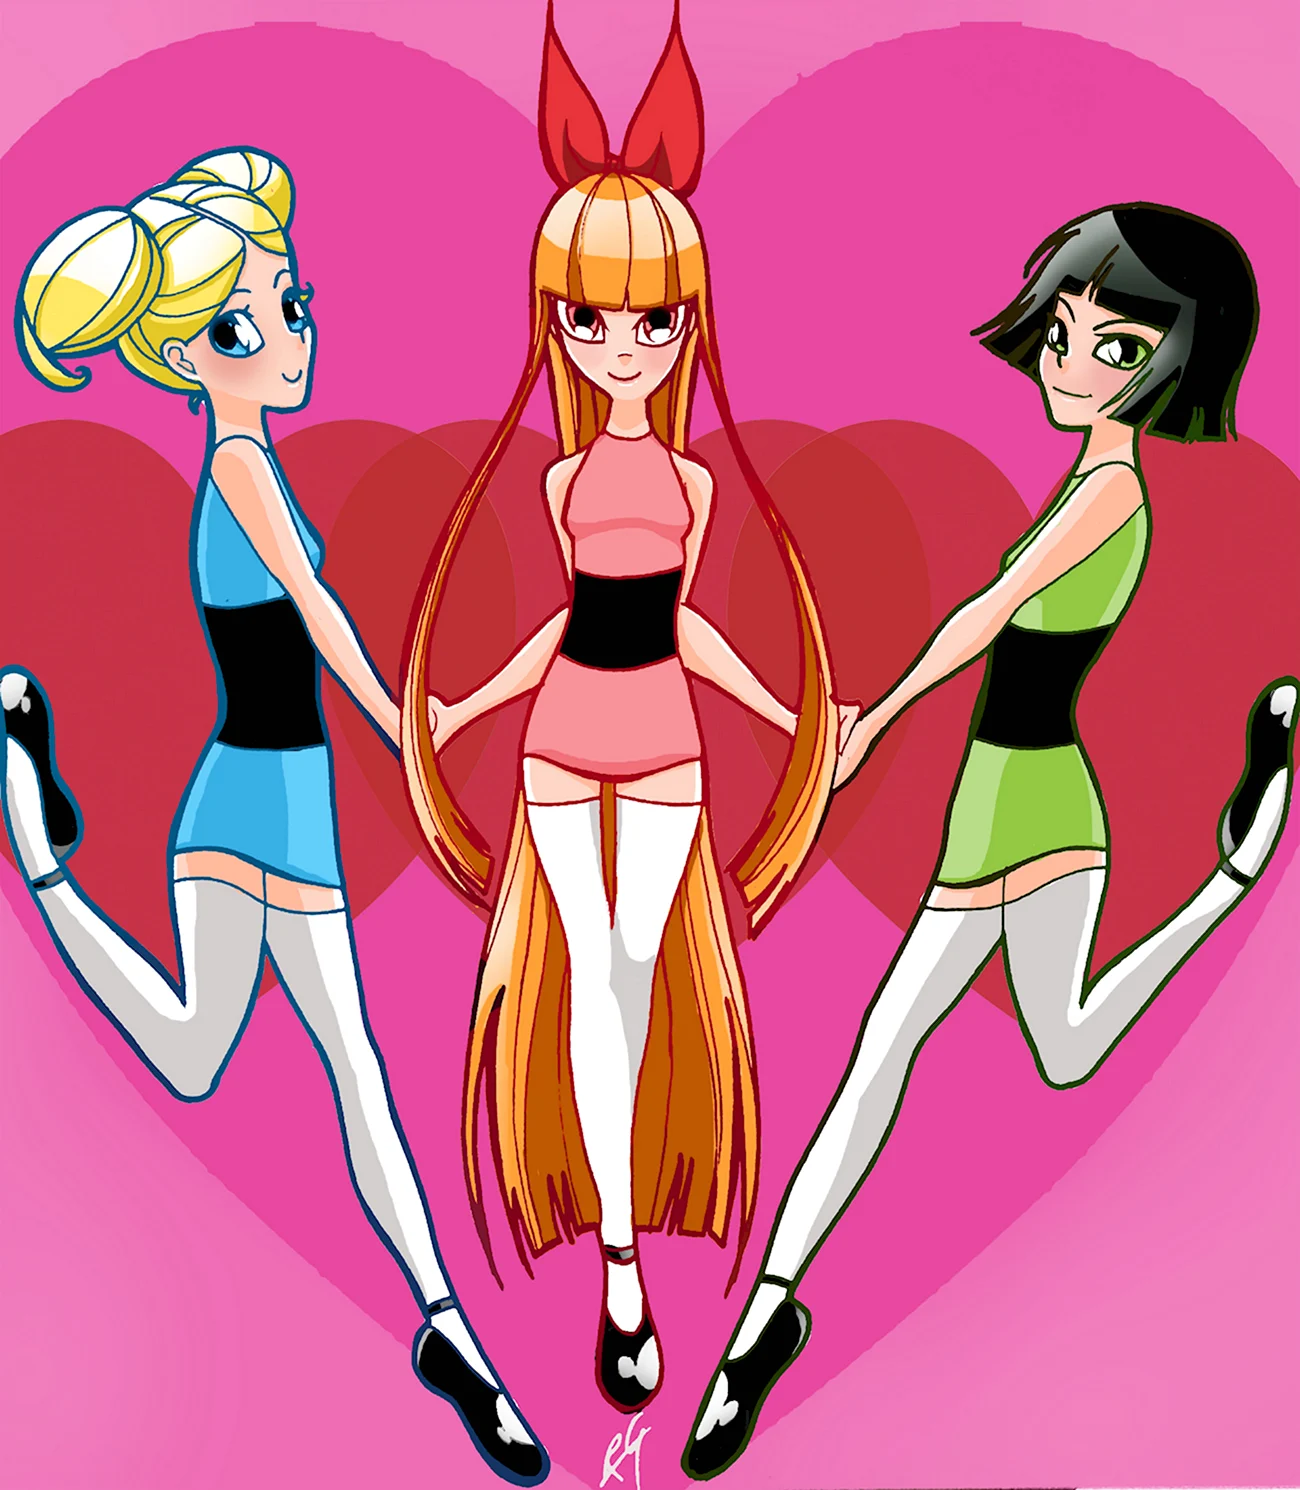 The Powerpuff girls мультсериал. Картинка из мультфильма